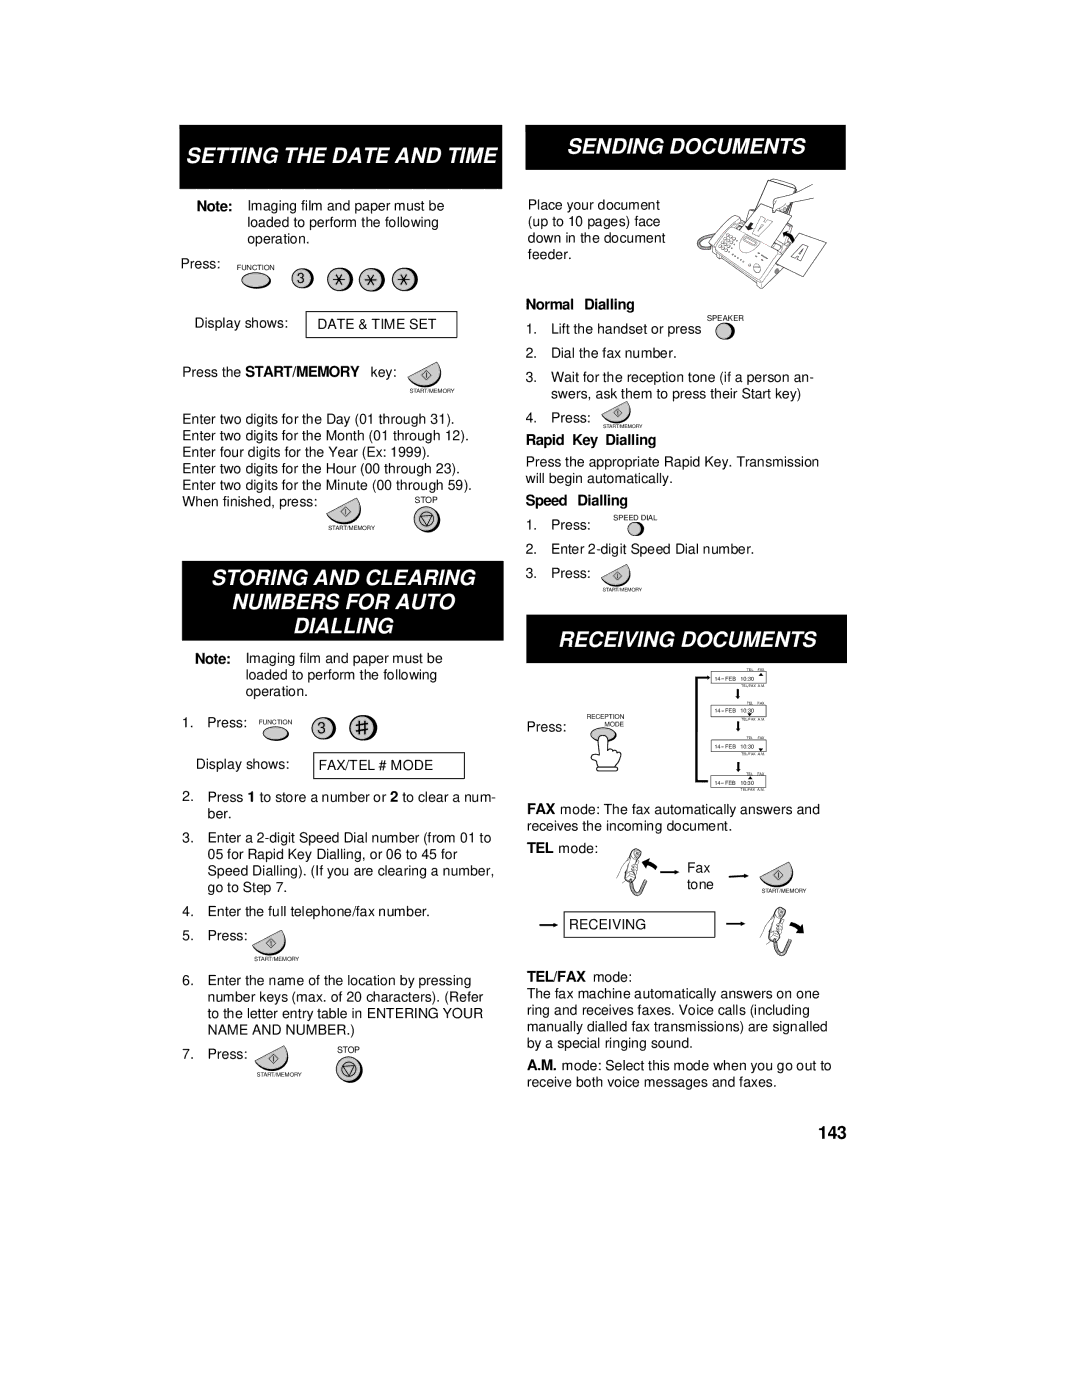 Sharp UX-470 operation manual Sending Documents, 143 